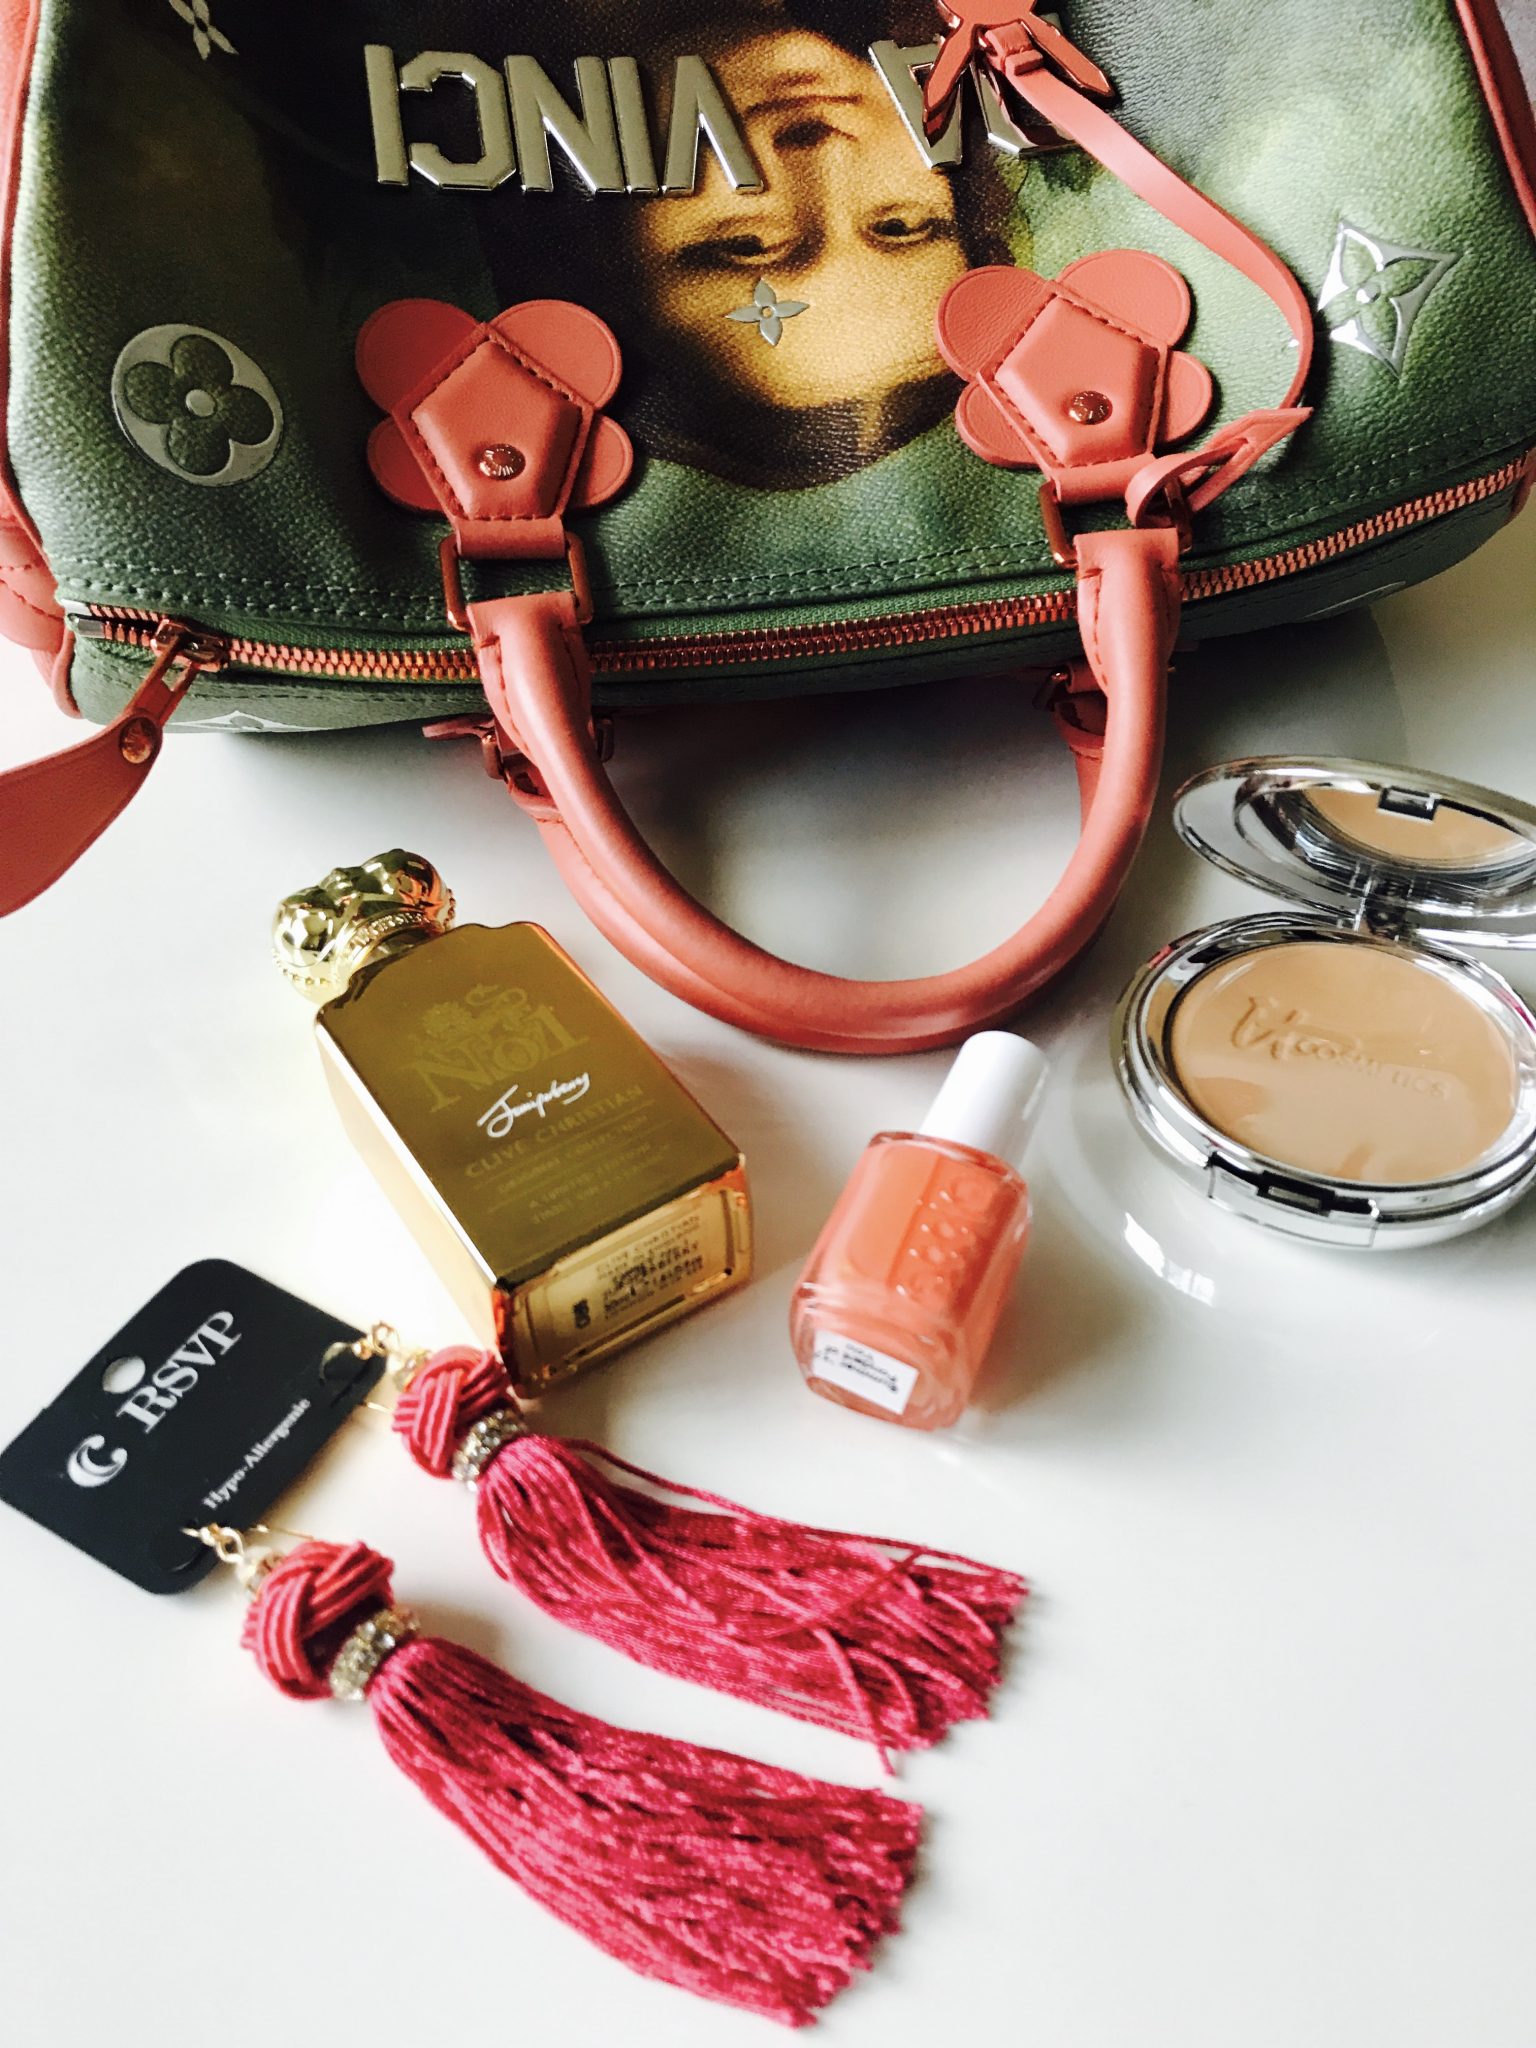 Louis Vuitton Da Vinci Speedy 30 Handbag